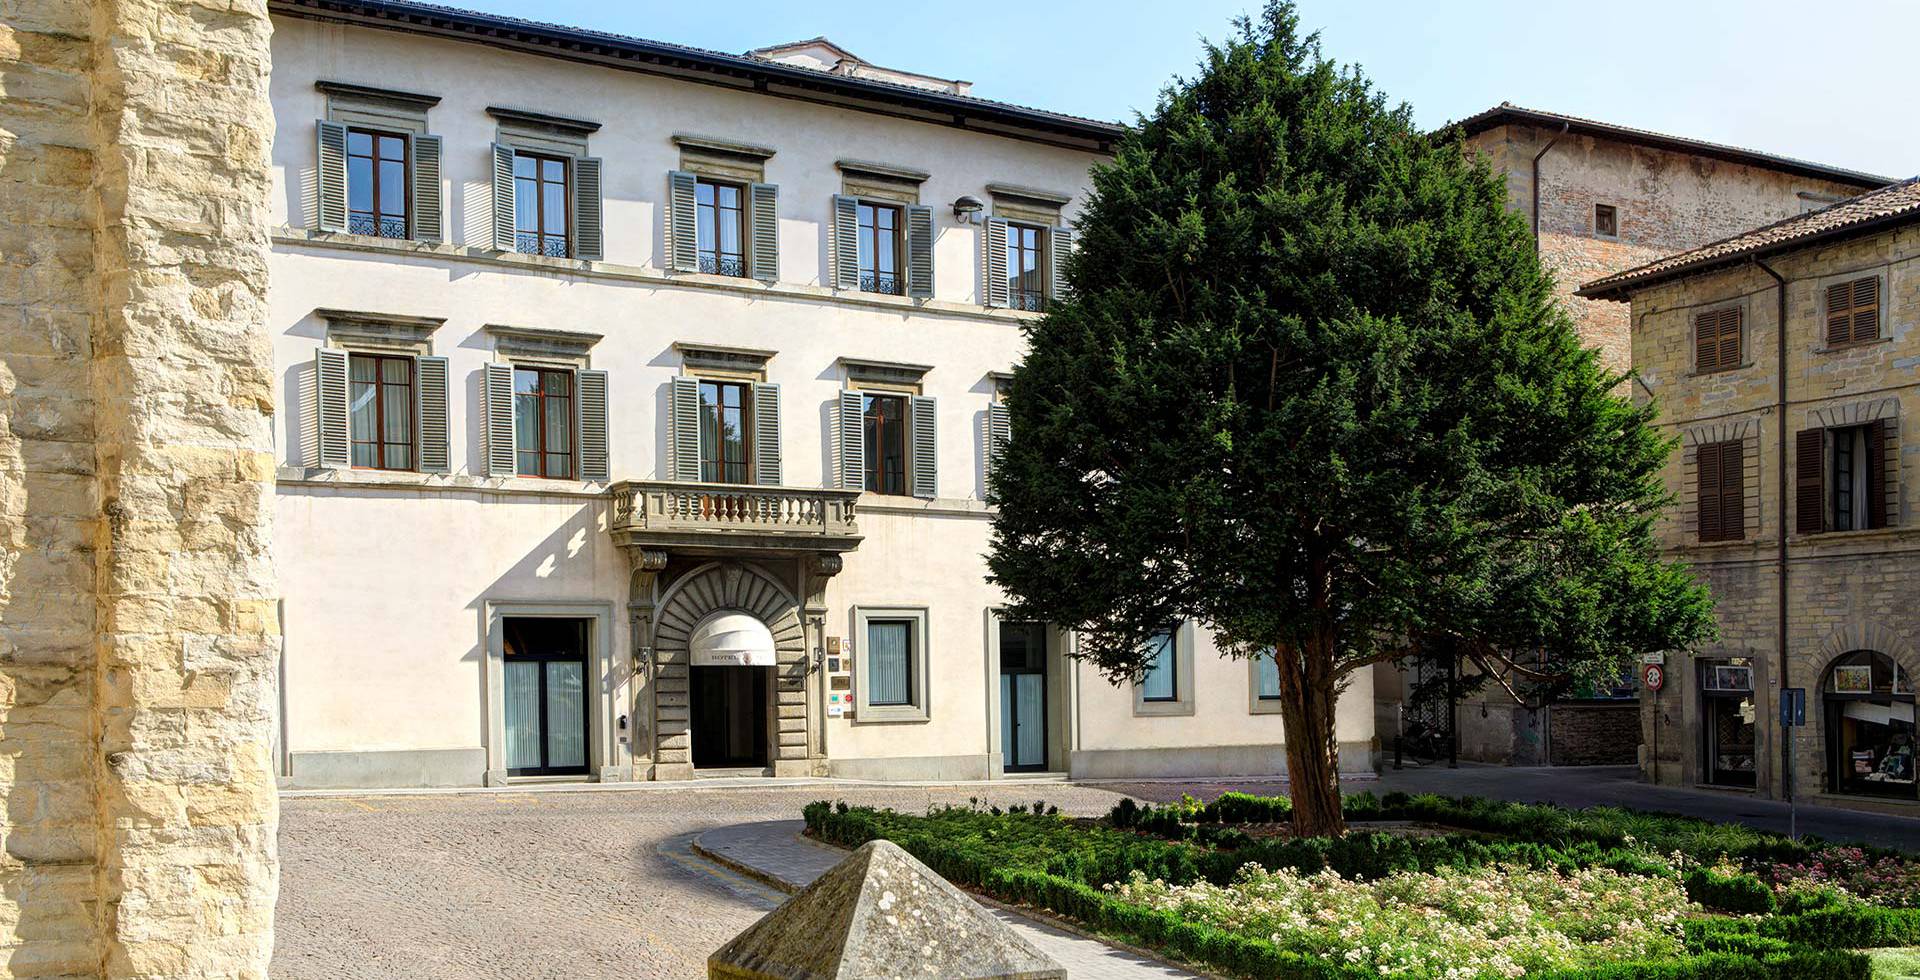 Apartamentos con servicios hoteleros Hotel Tiferno Città di Castello, Umbria